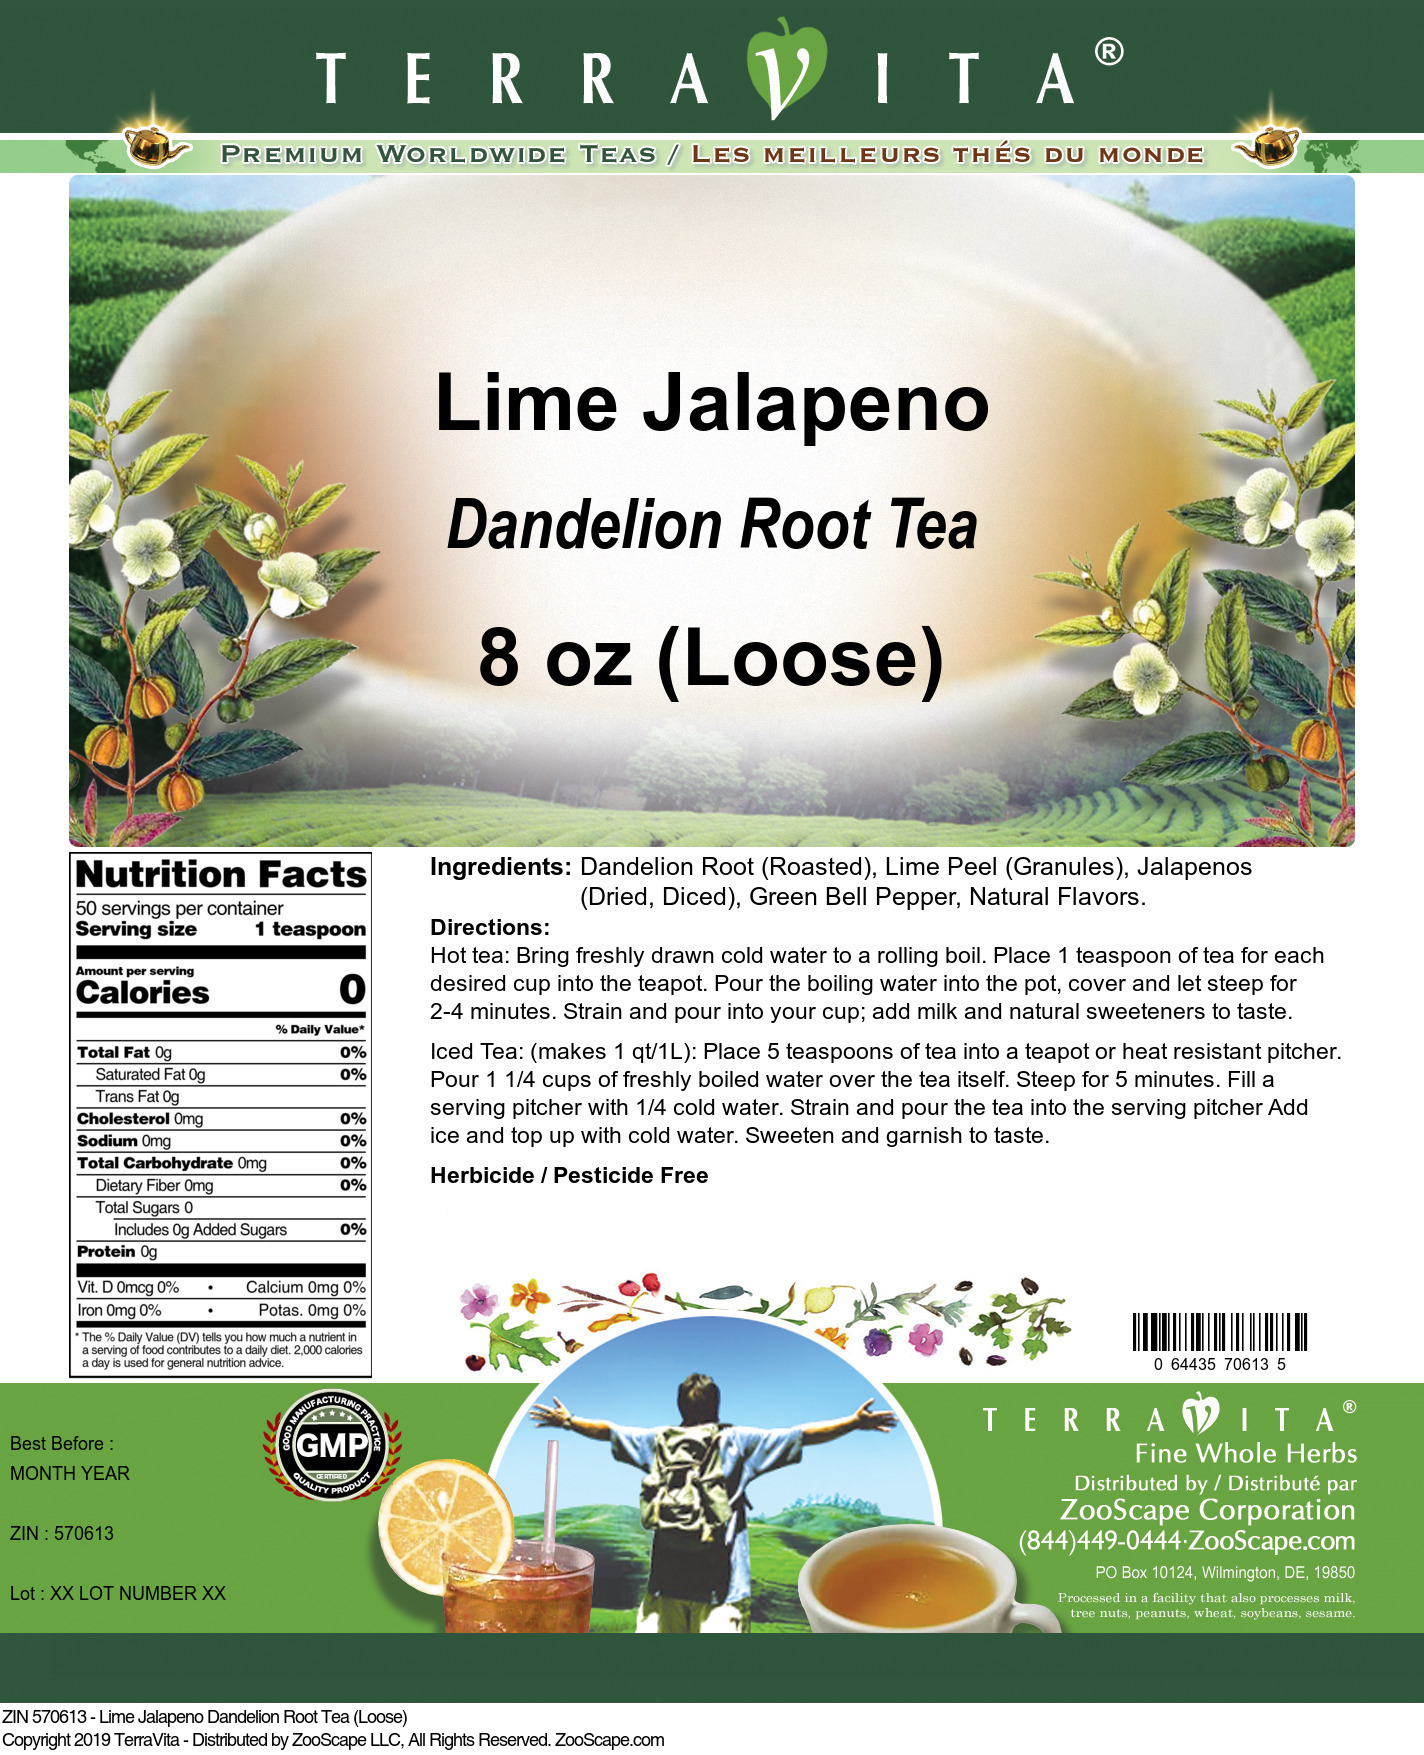 Lime Jalapeno Dandelion Root Tea (Loose) - Label